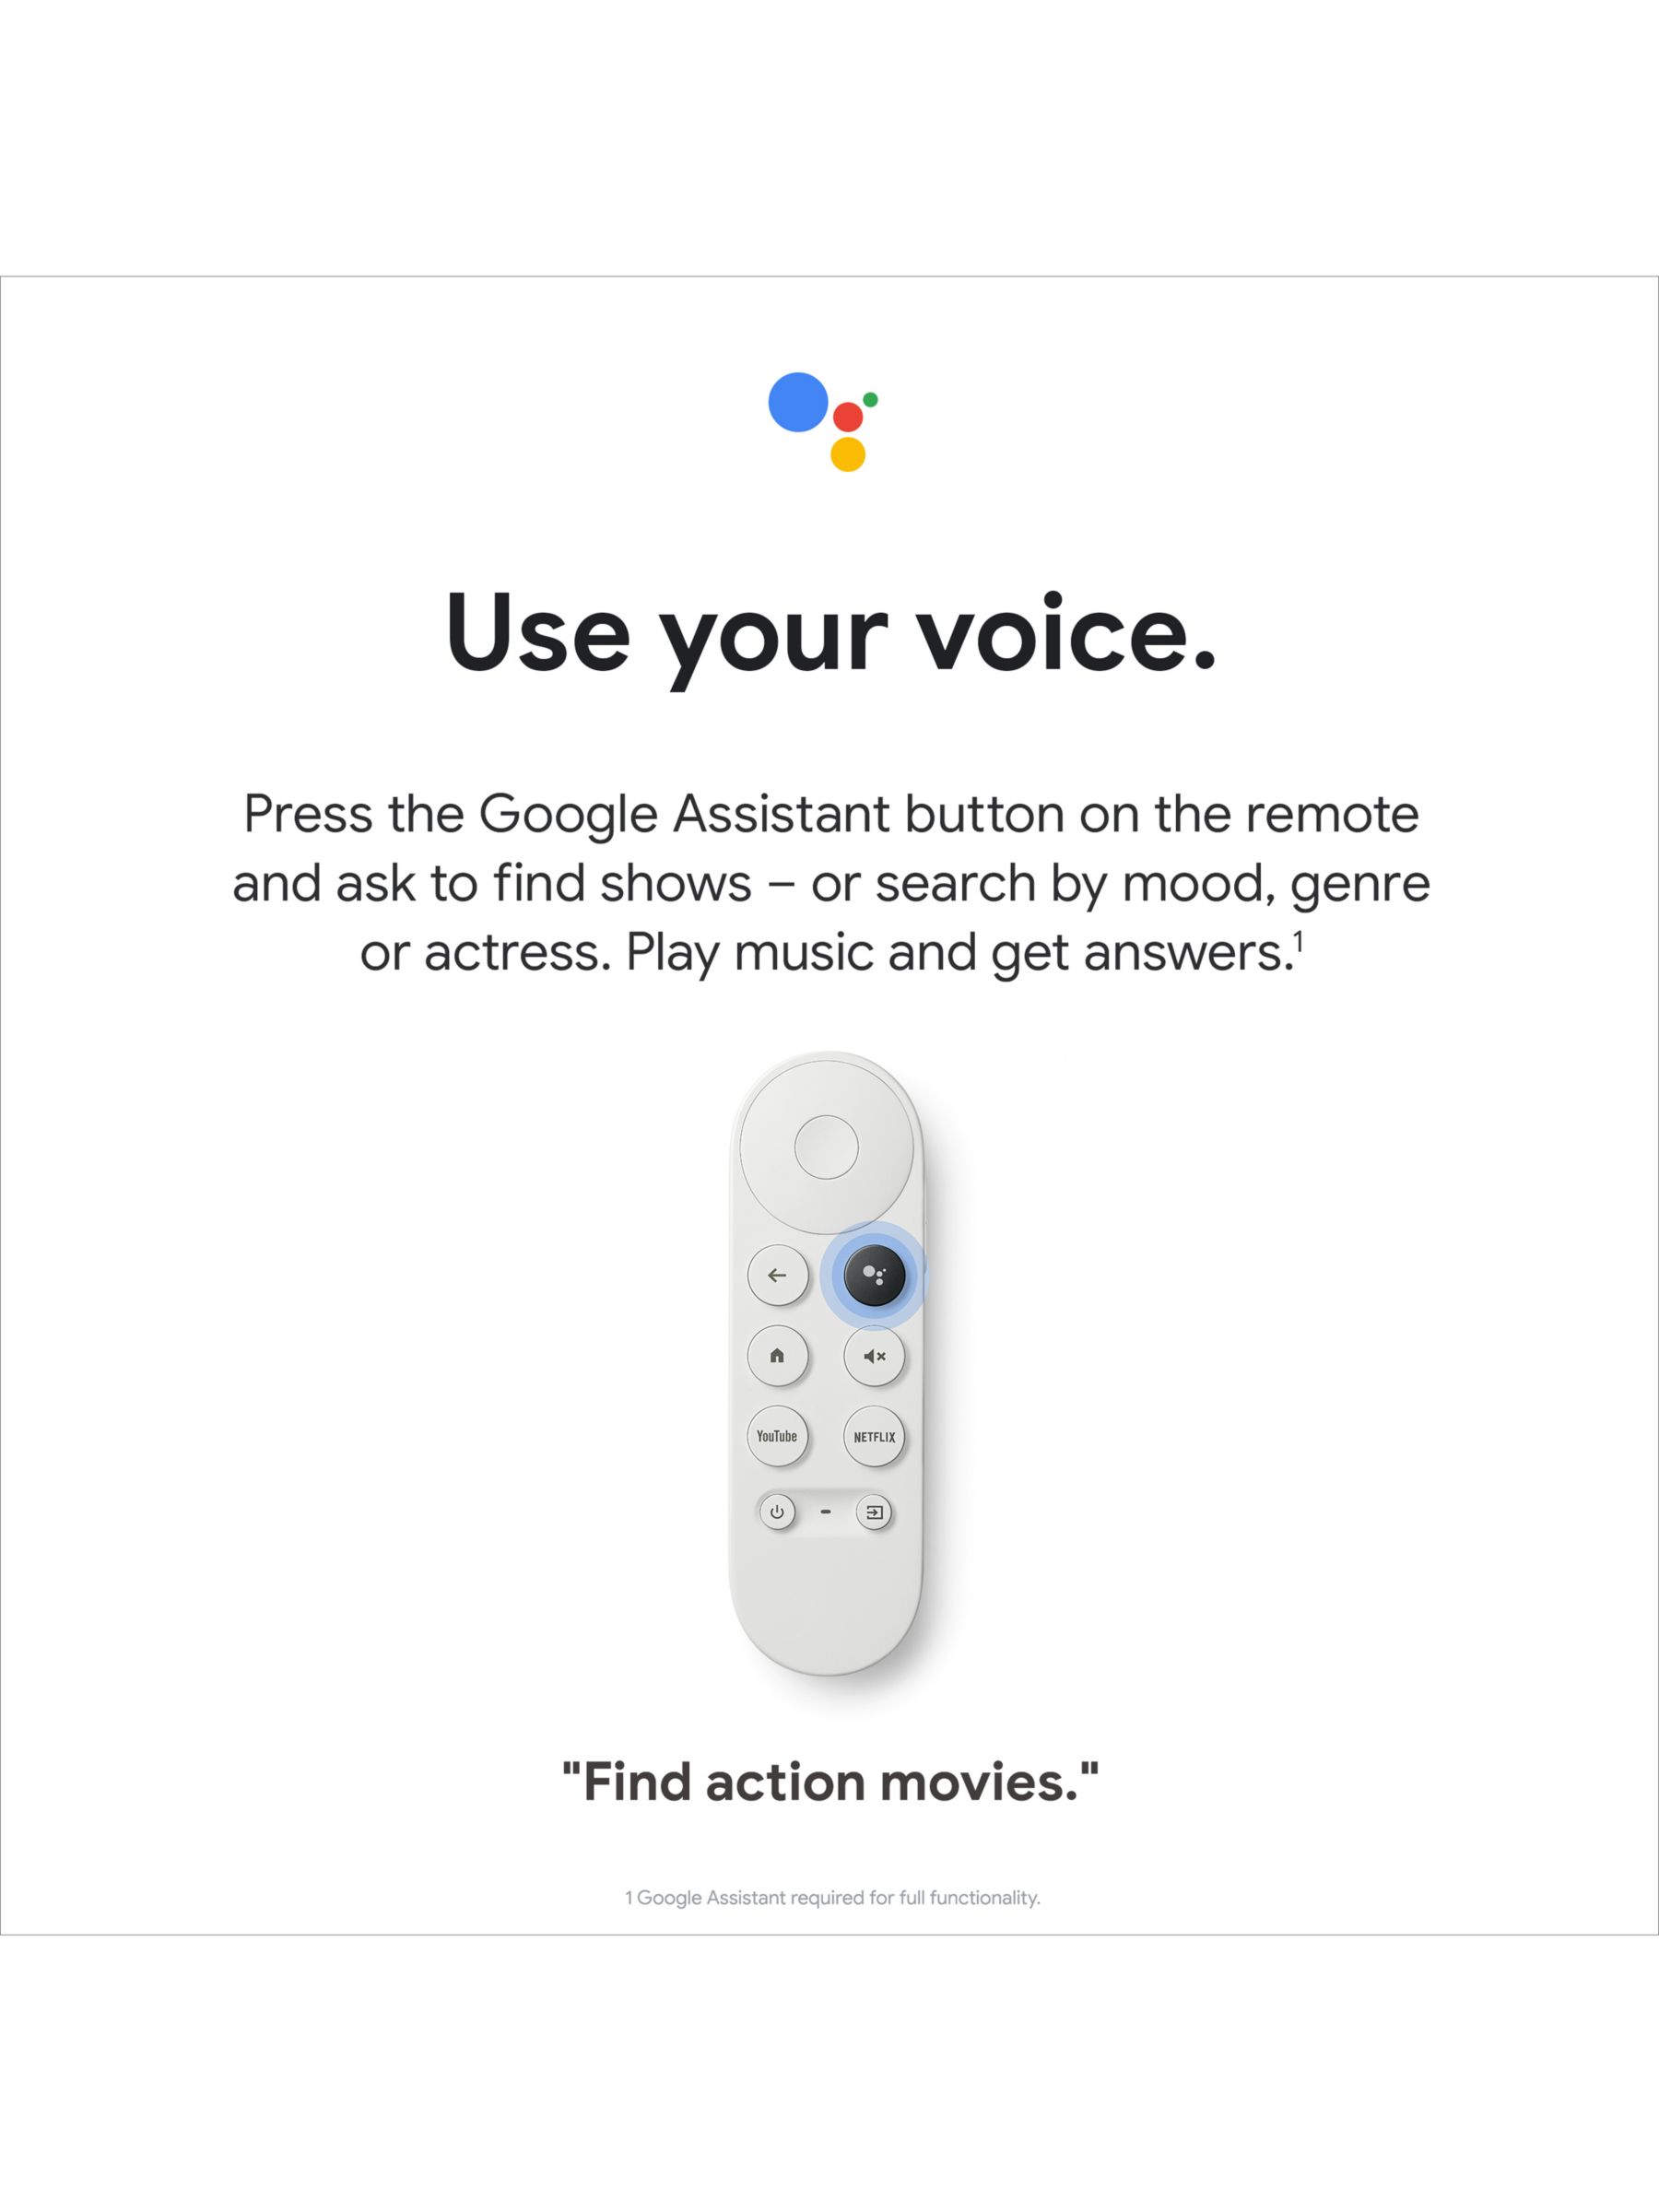 Chromecast with Google TV - Google Store